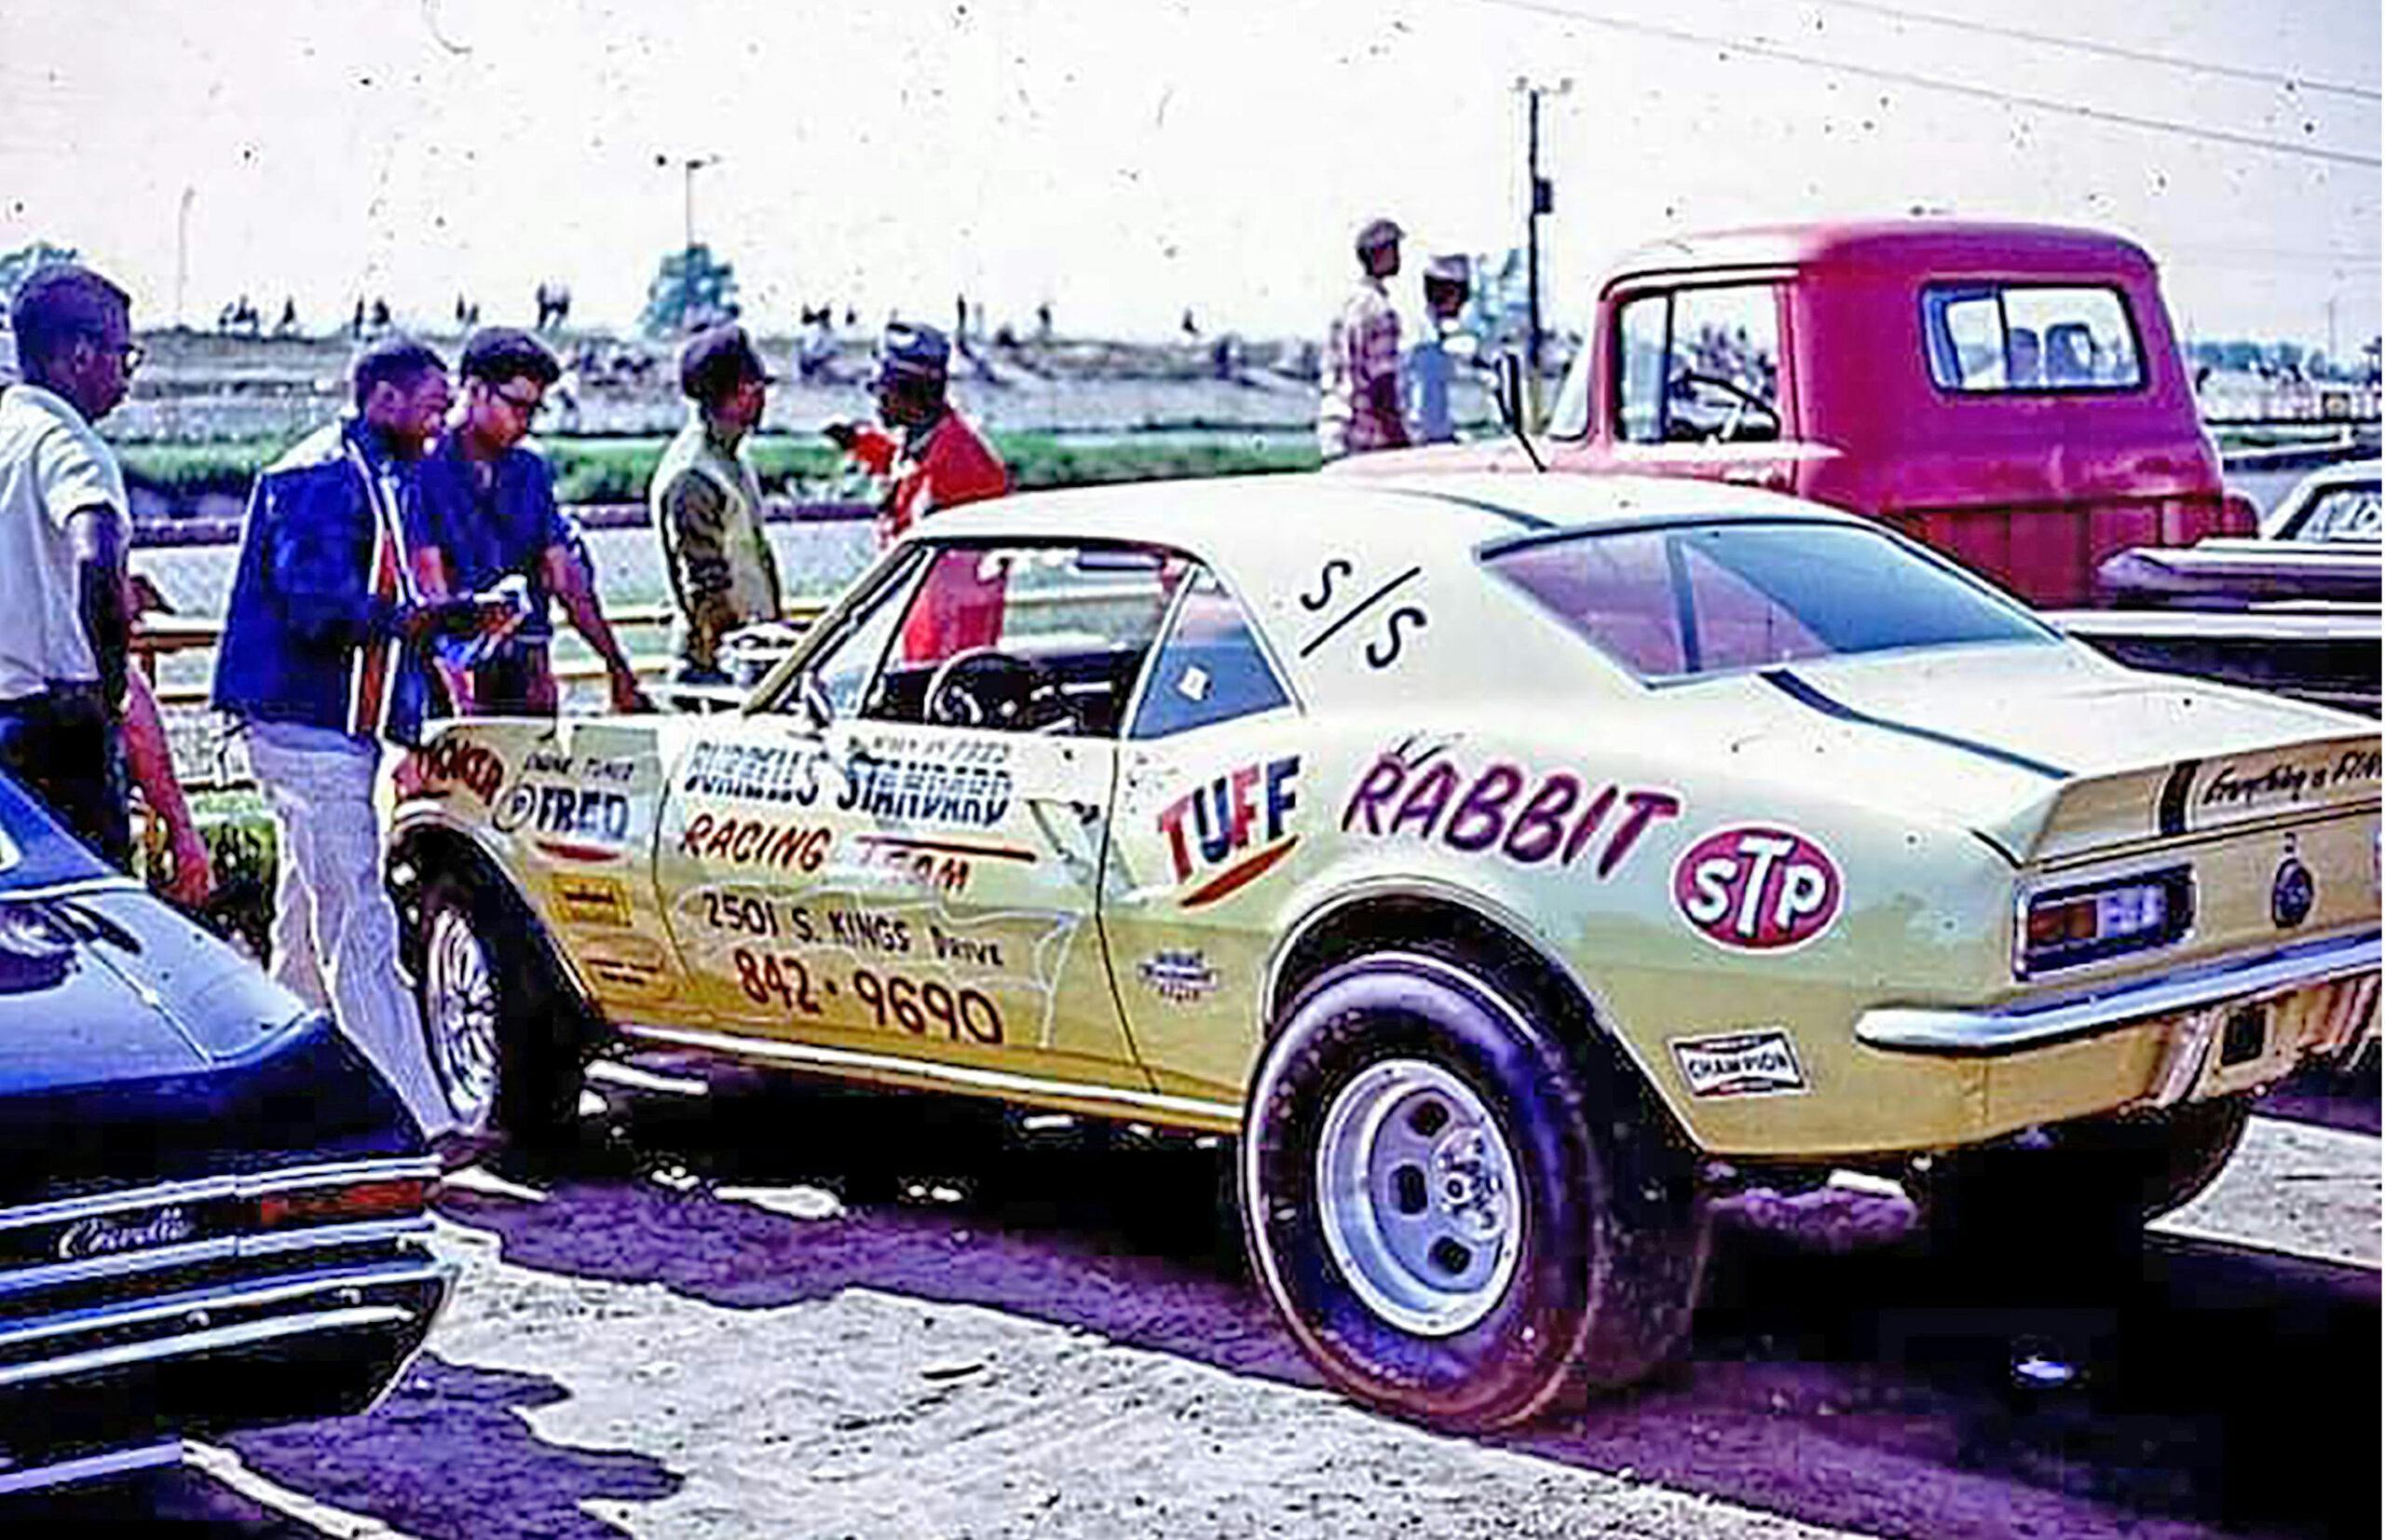 1968 Chevrolet Camaro race car Sammy Scott Ed Burrell Tuf Rabbit